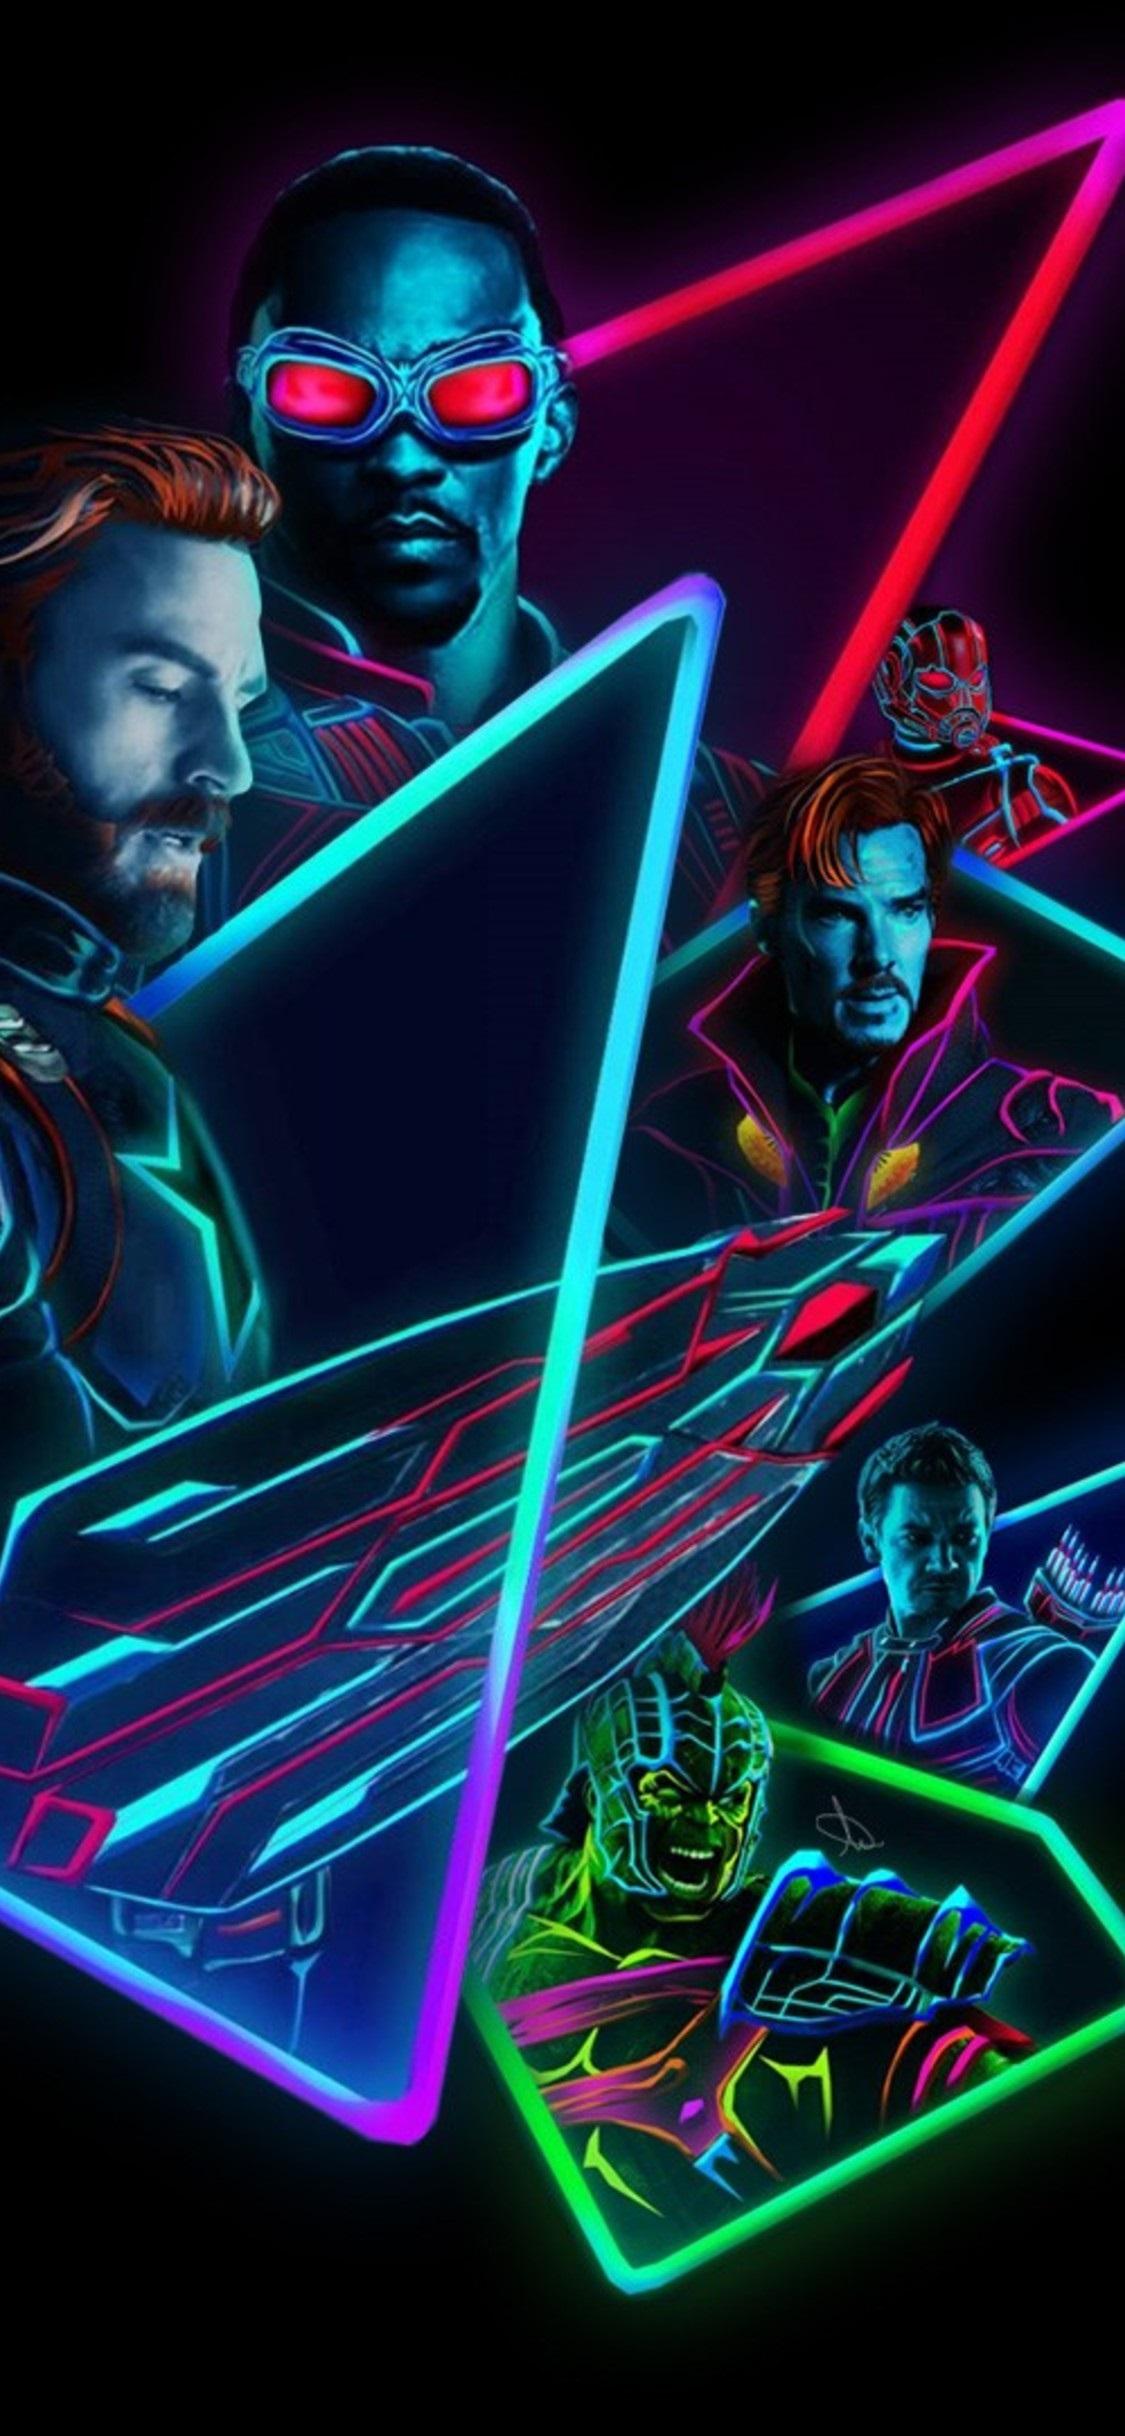 80s Wallpaper For iPhone Avengers Infinity War 2018 Avengers